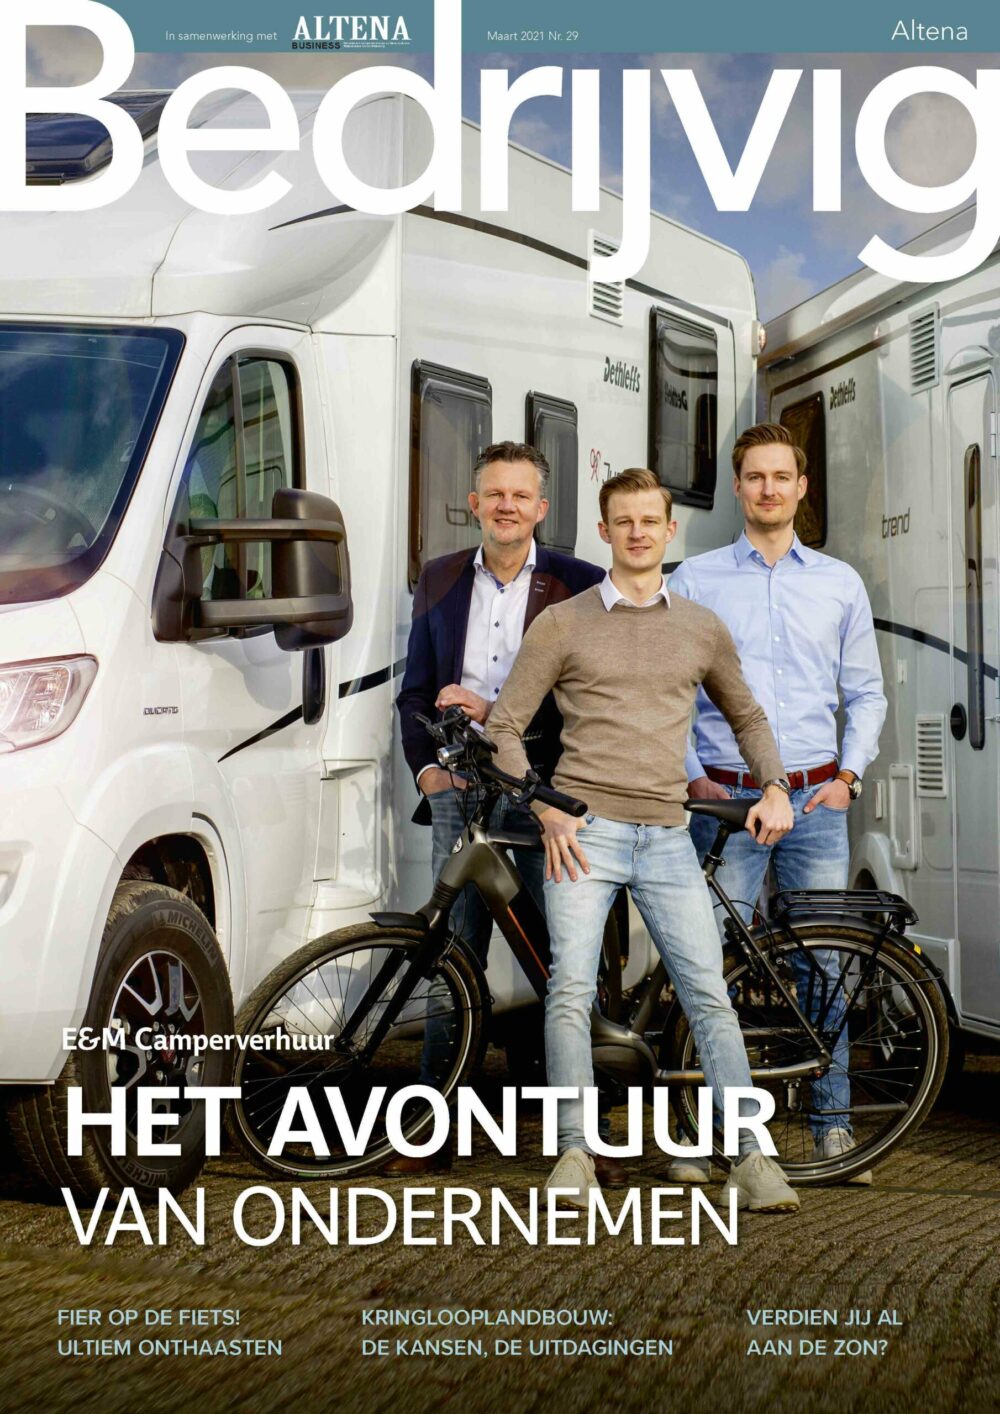 Bedrijvig Altena magazine nr29 maart 2021 cover